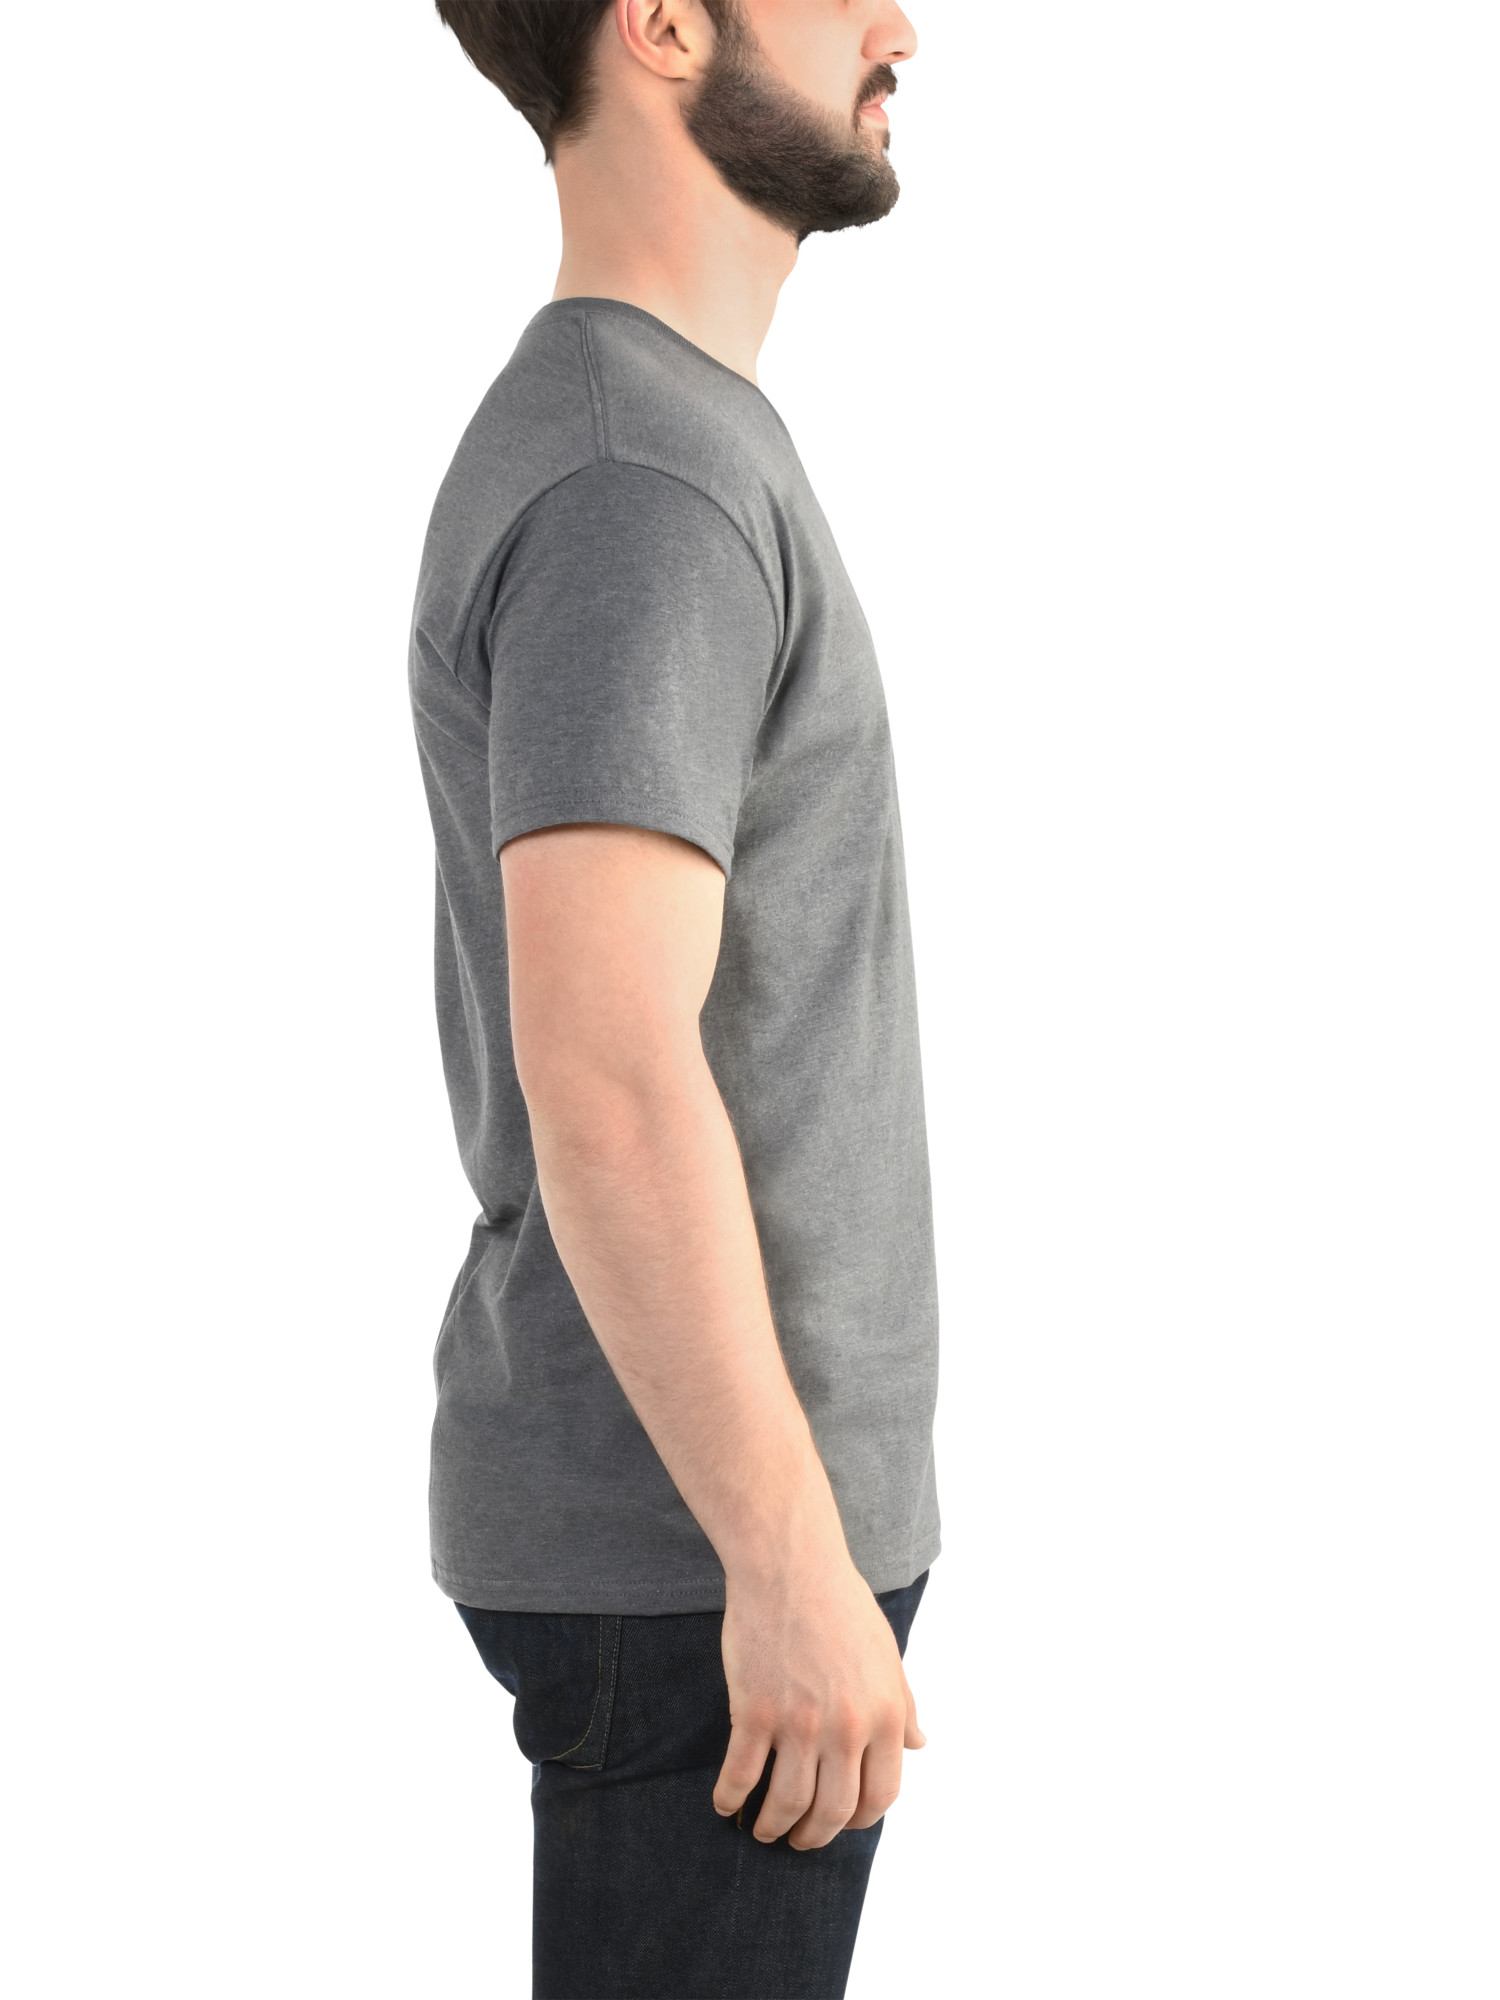 Fruit of the Loom Men's Platinum Eversoft Short Sleeve V Neck T Shirt, up to Size 4XL - image 3 of 6